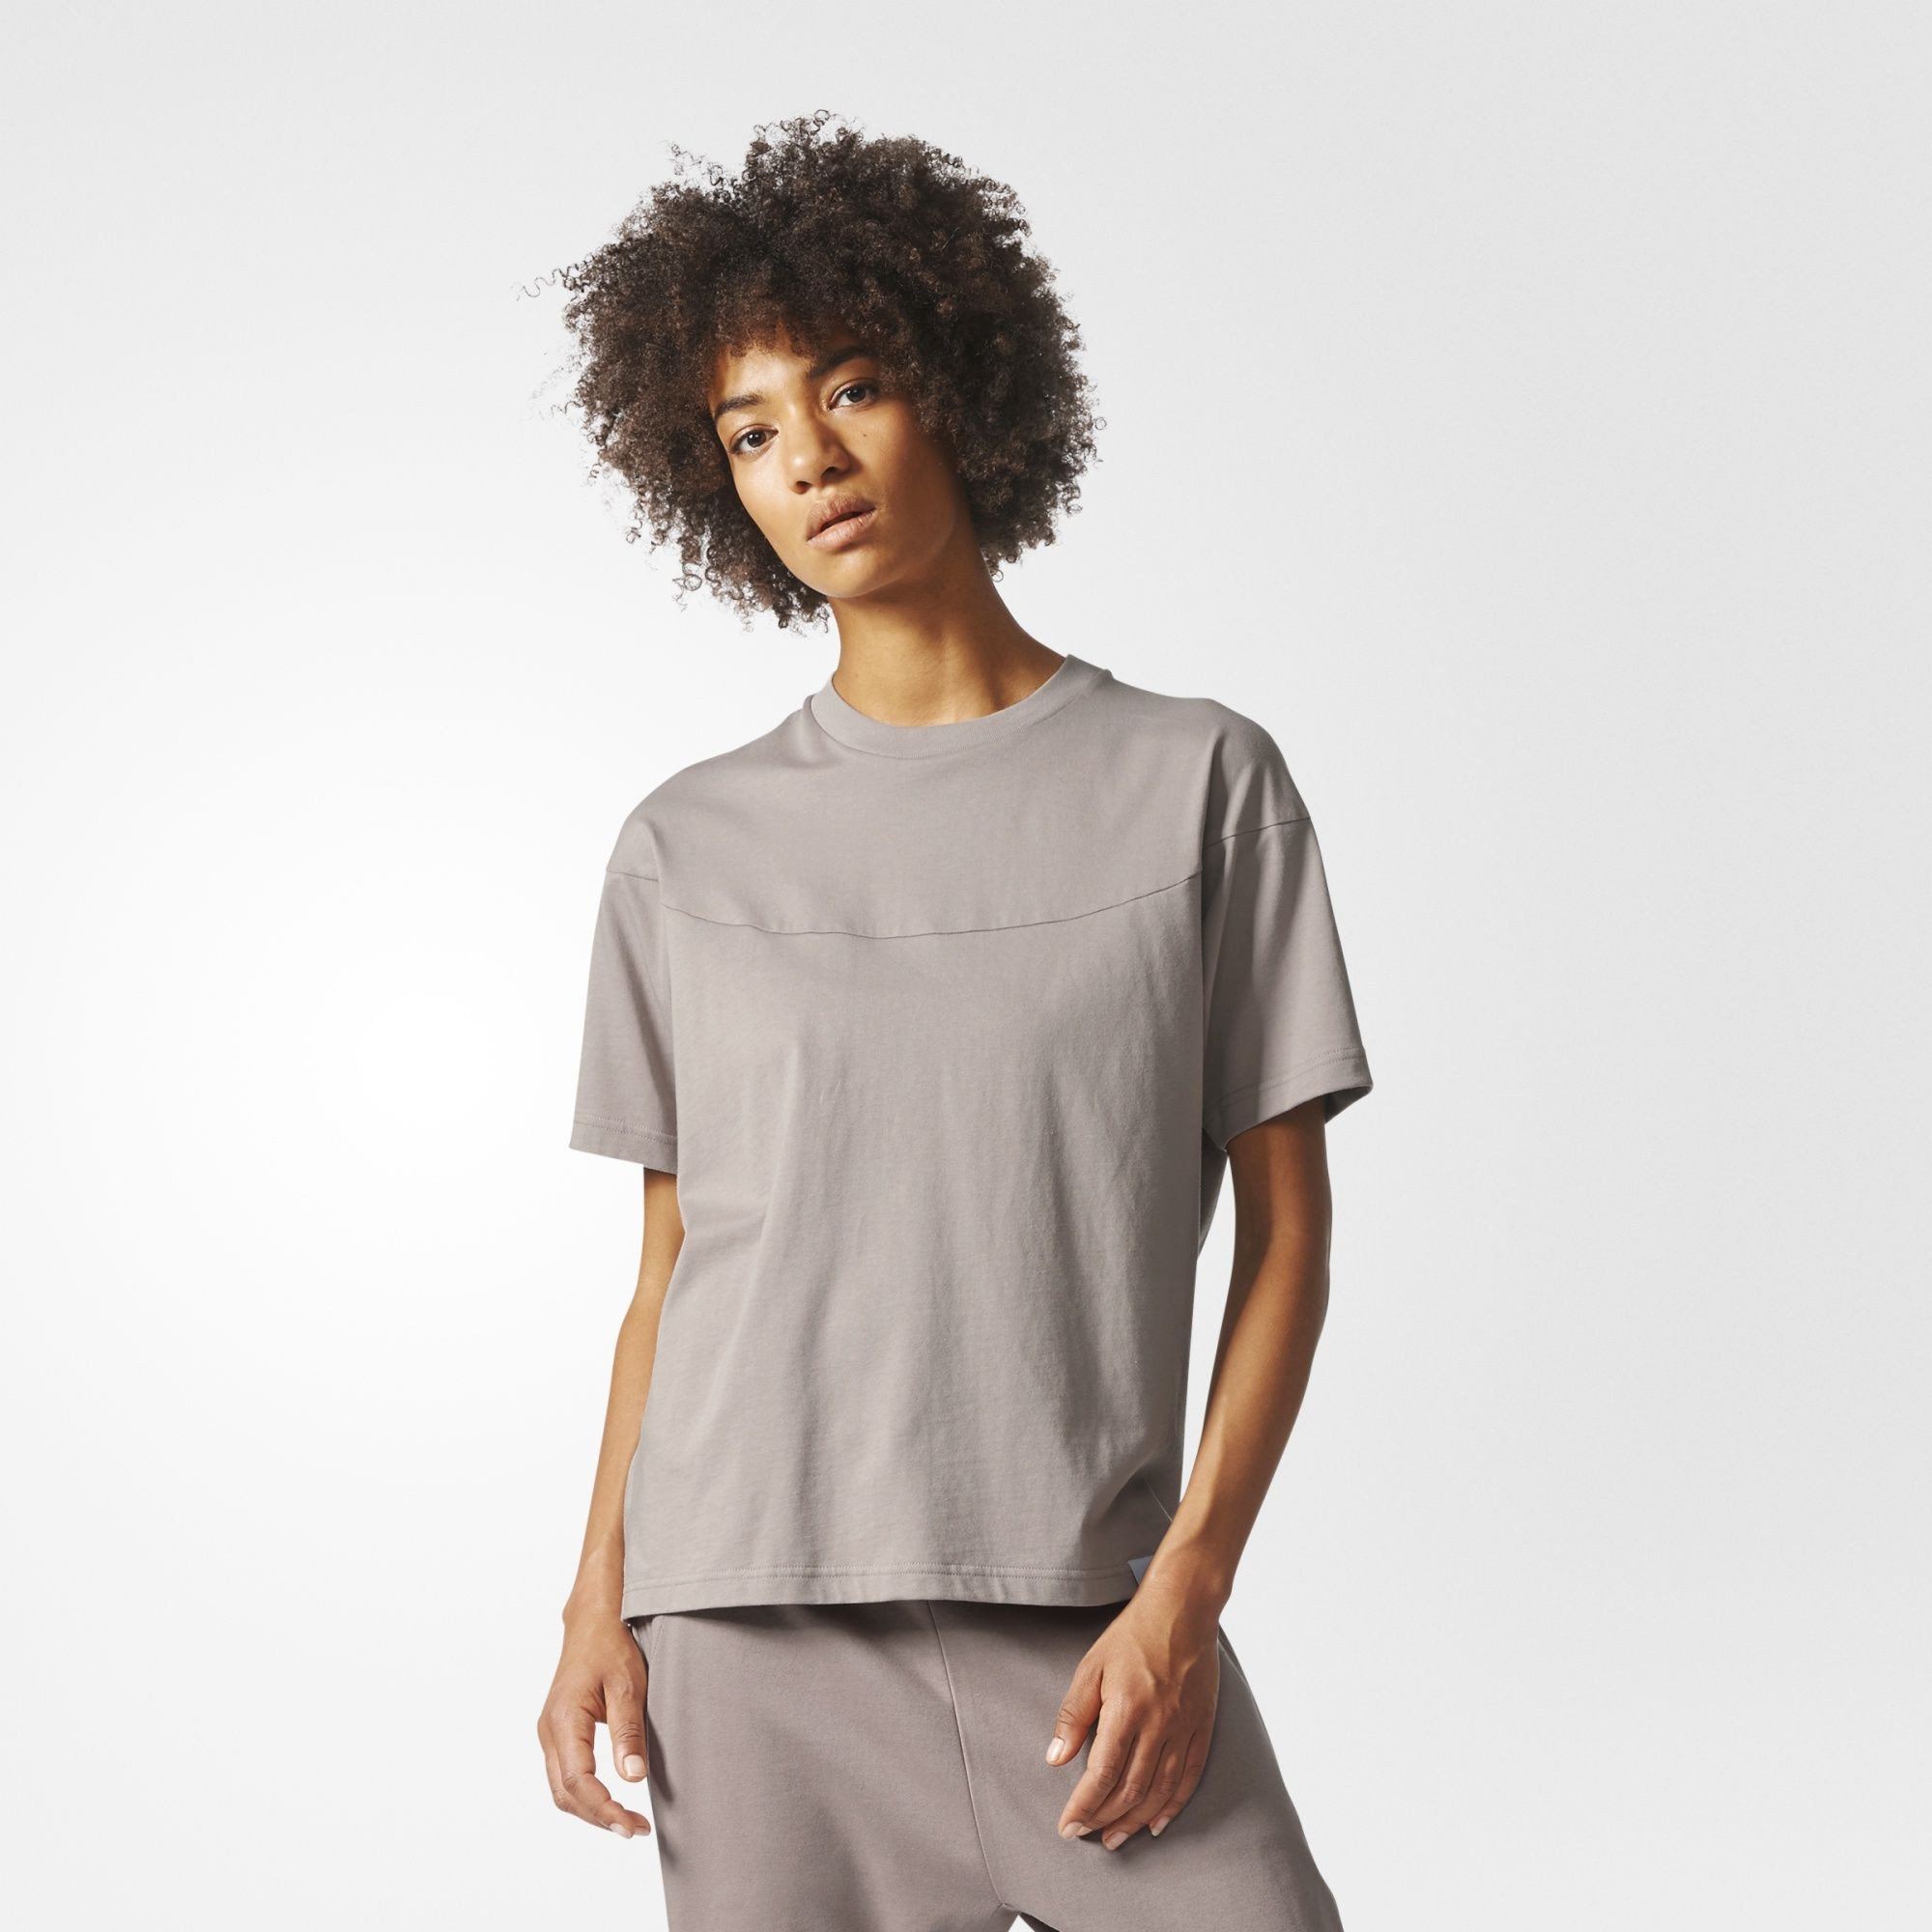 Originals T-shirt Vapour Grey Women BP6088 (Solestop.com)